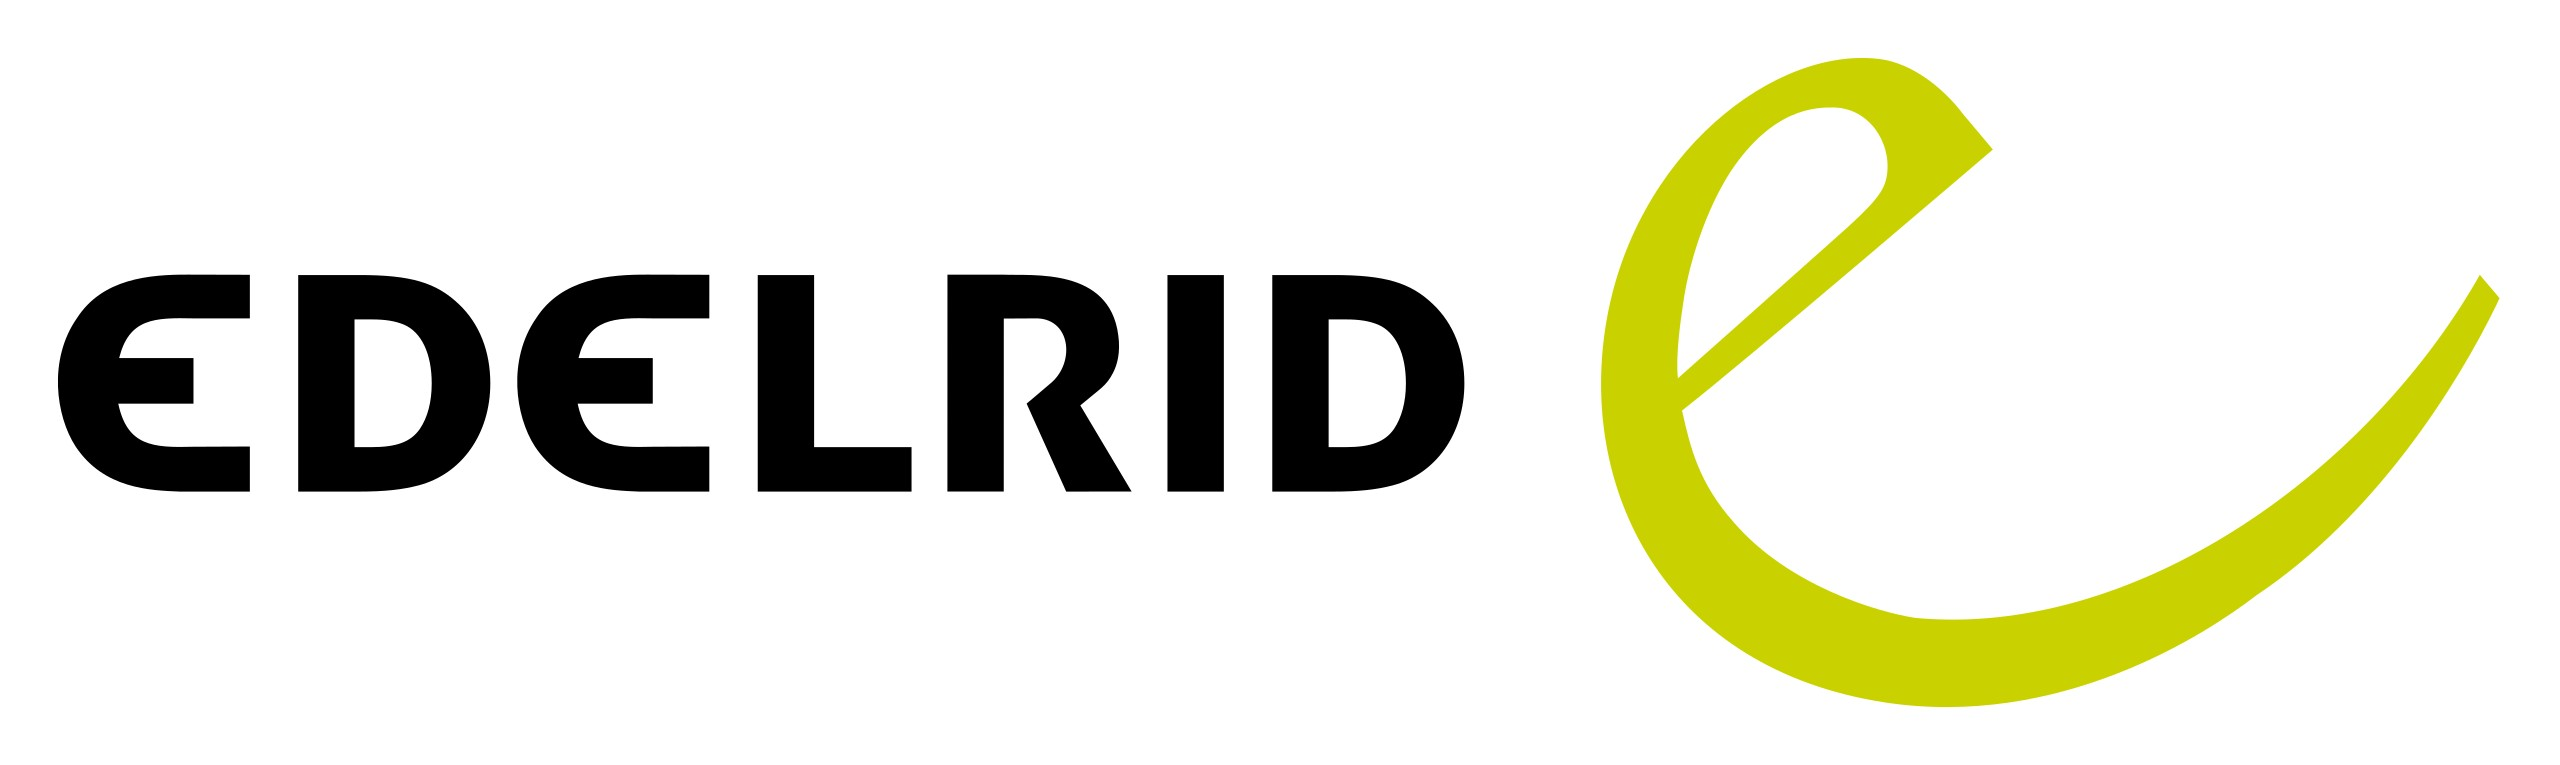 Edelrid logo